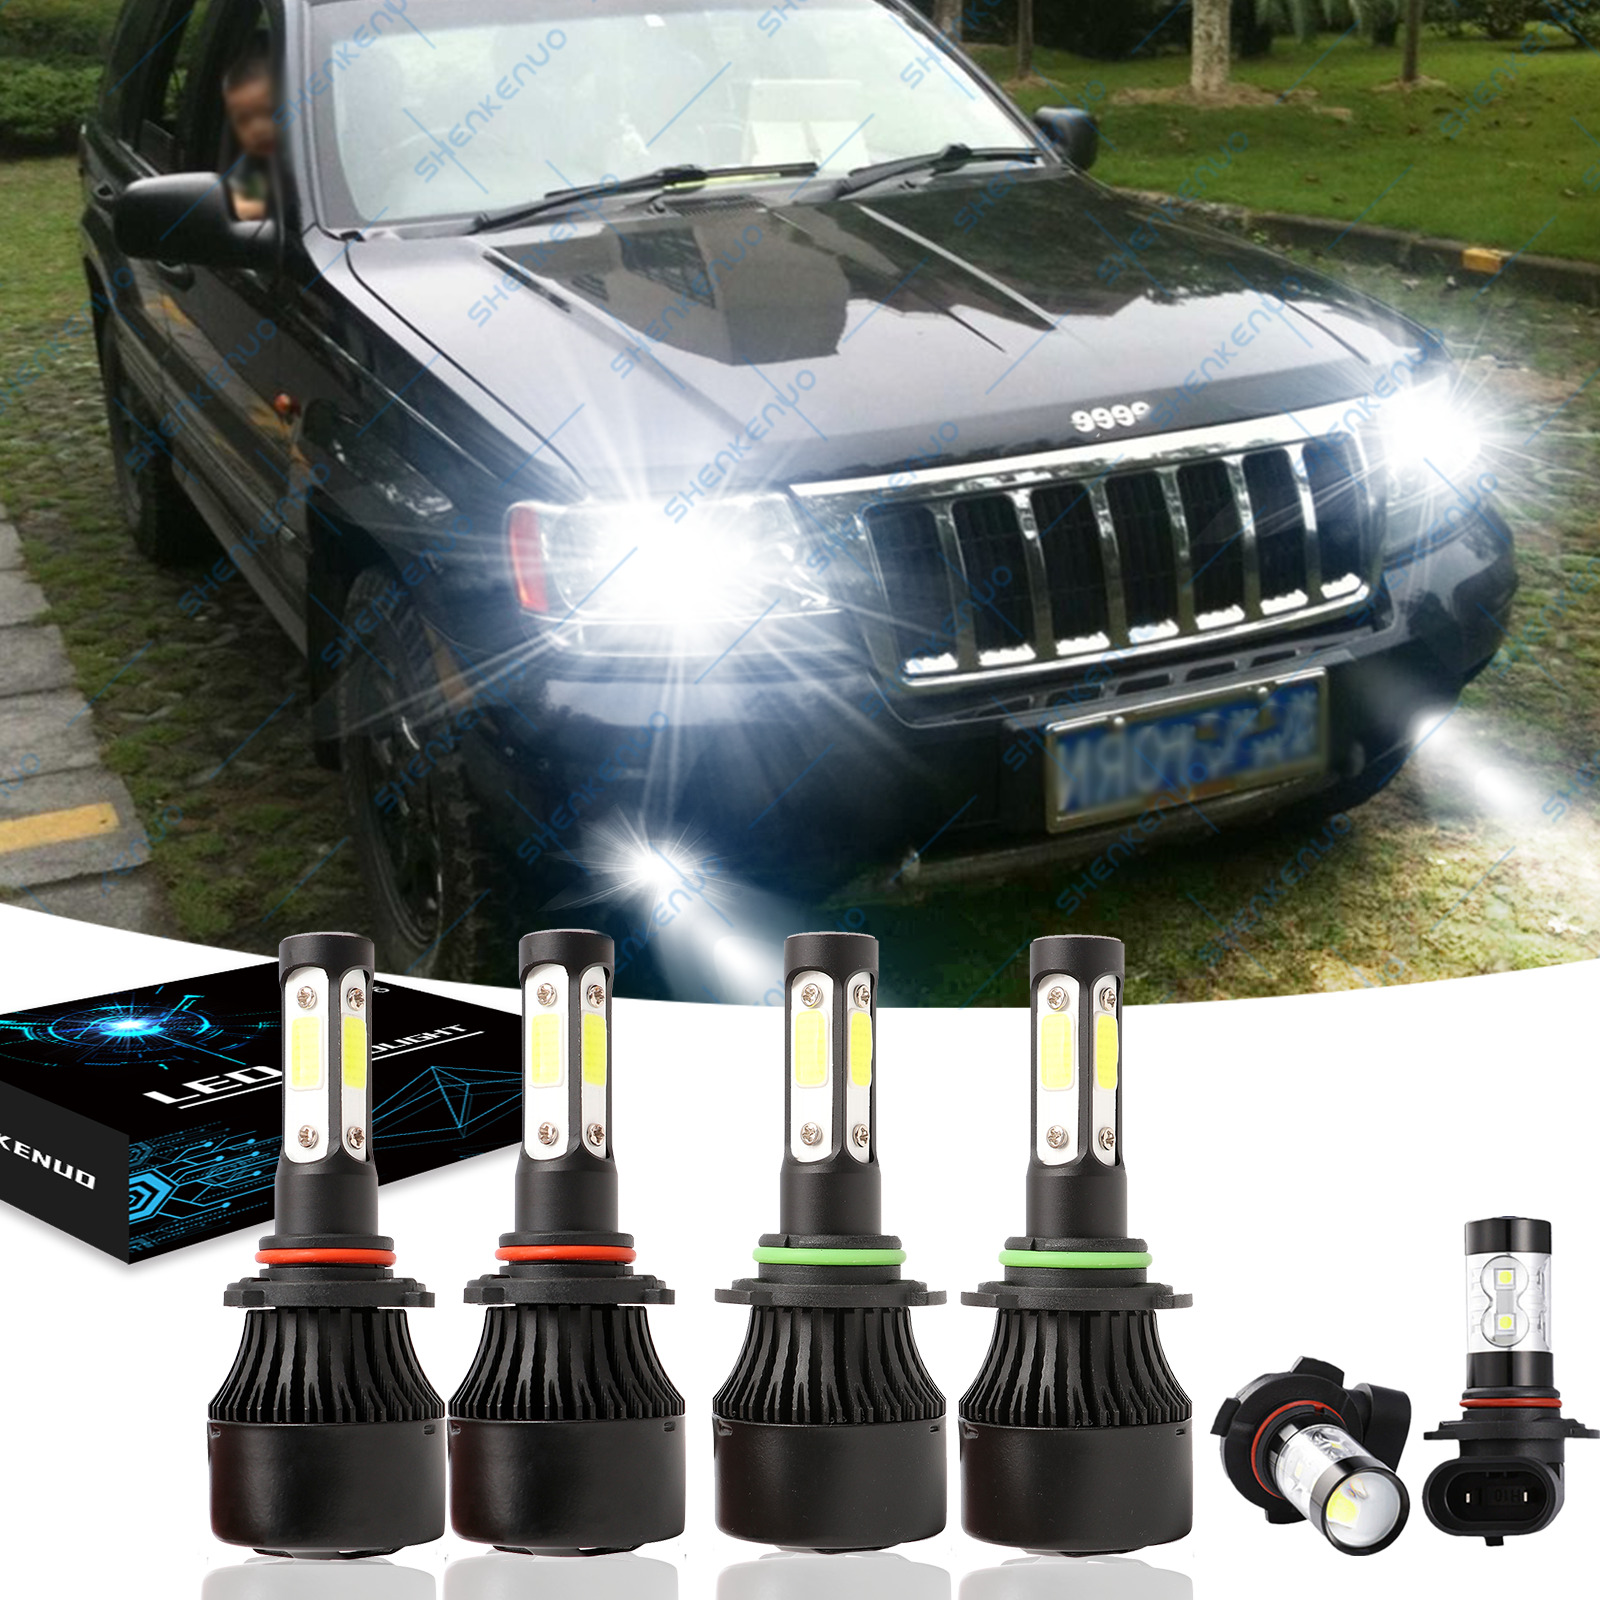 6x Ultra Bright 4Side LED Headlight Fog Light Bulb For Jeep Grand Cherokee 05-10